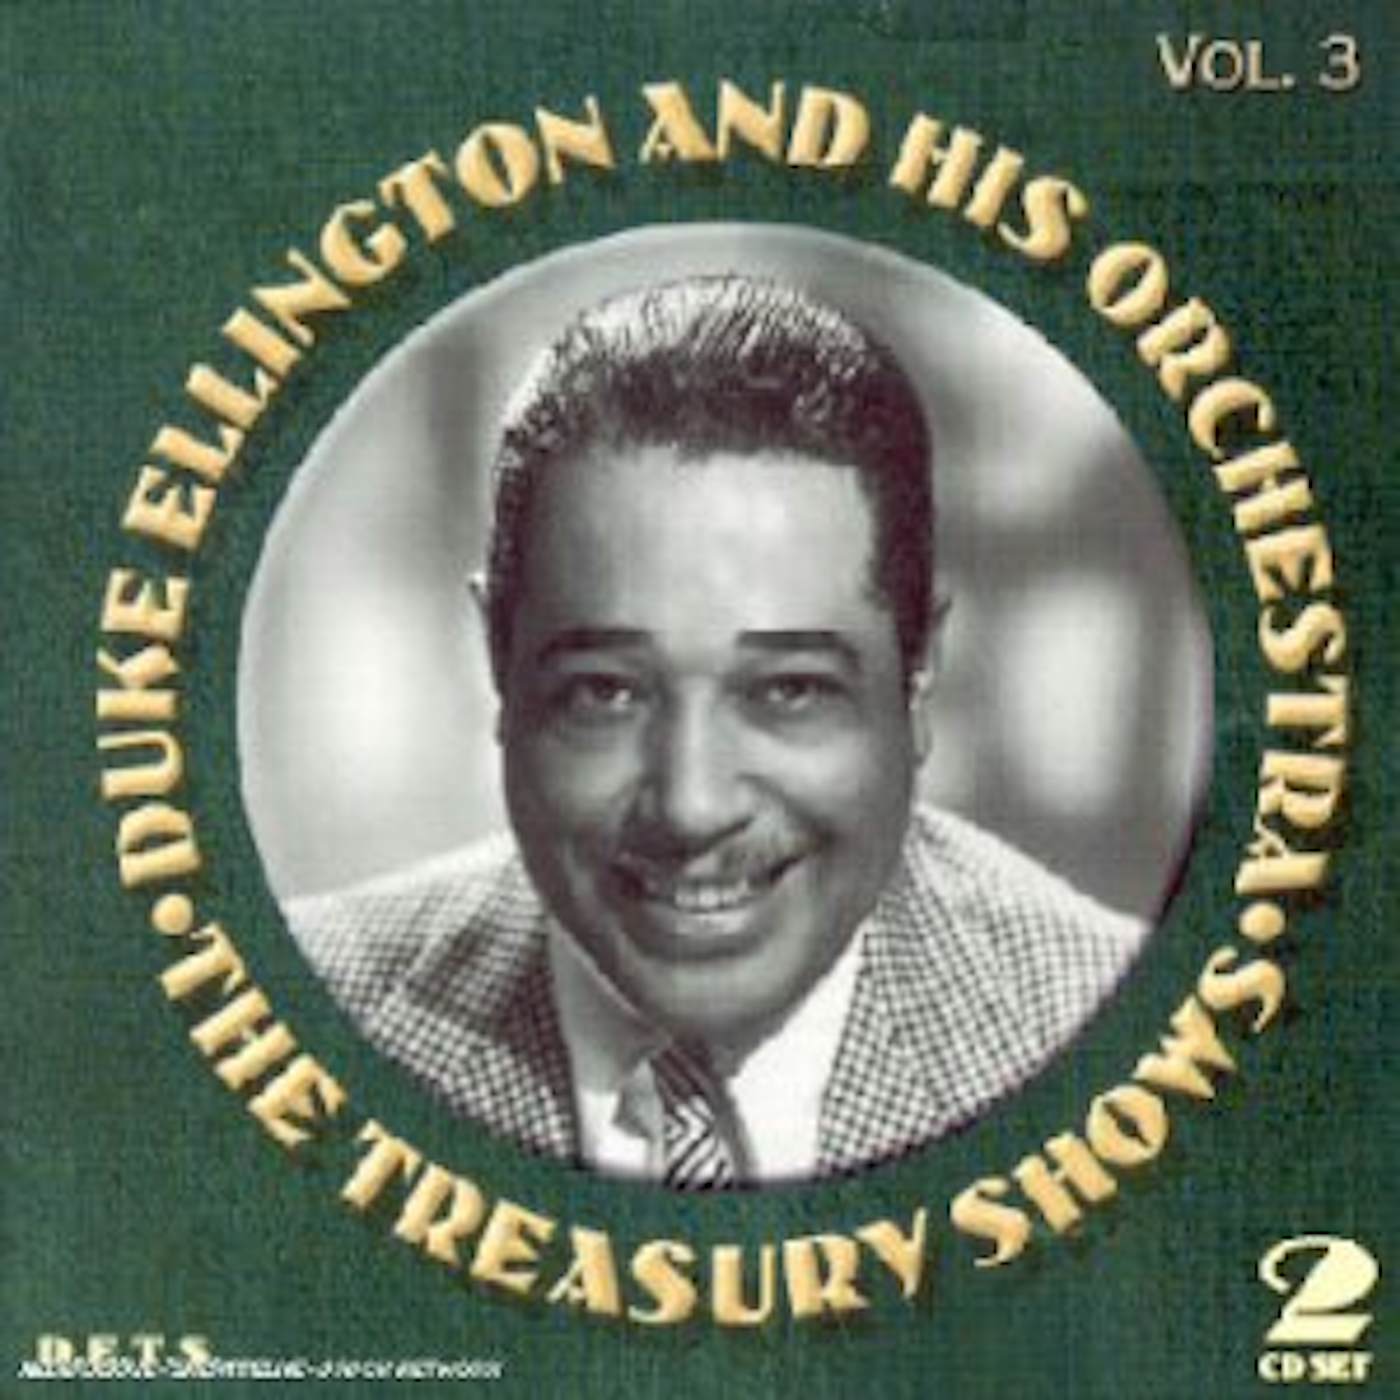 Duke Ellington TREASURY SHOWS 3 CD